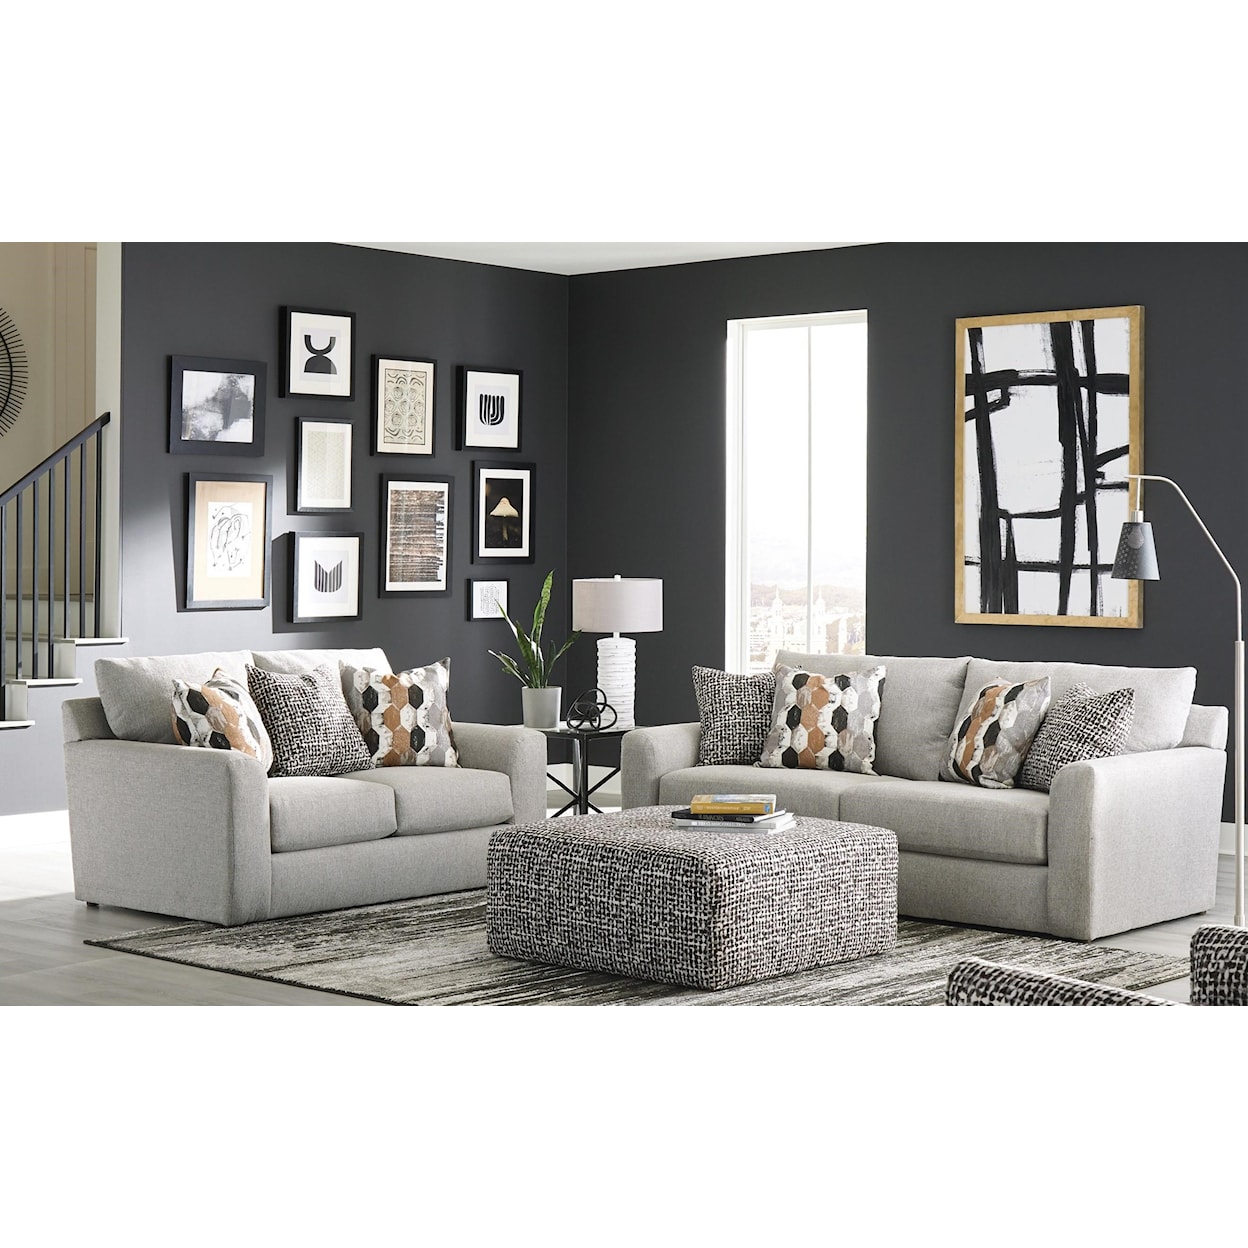 Jackson Furniture 3288 Hooten Living Room Group